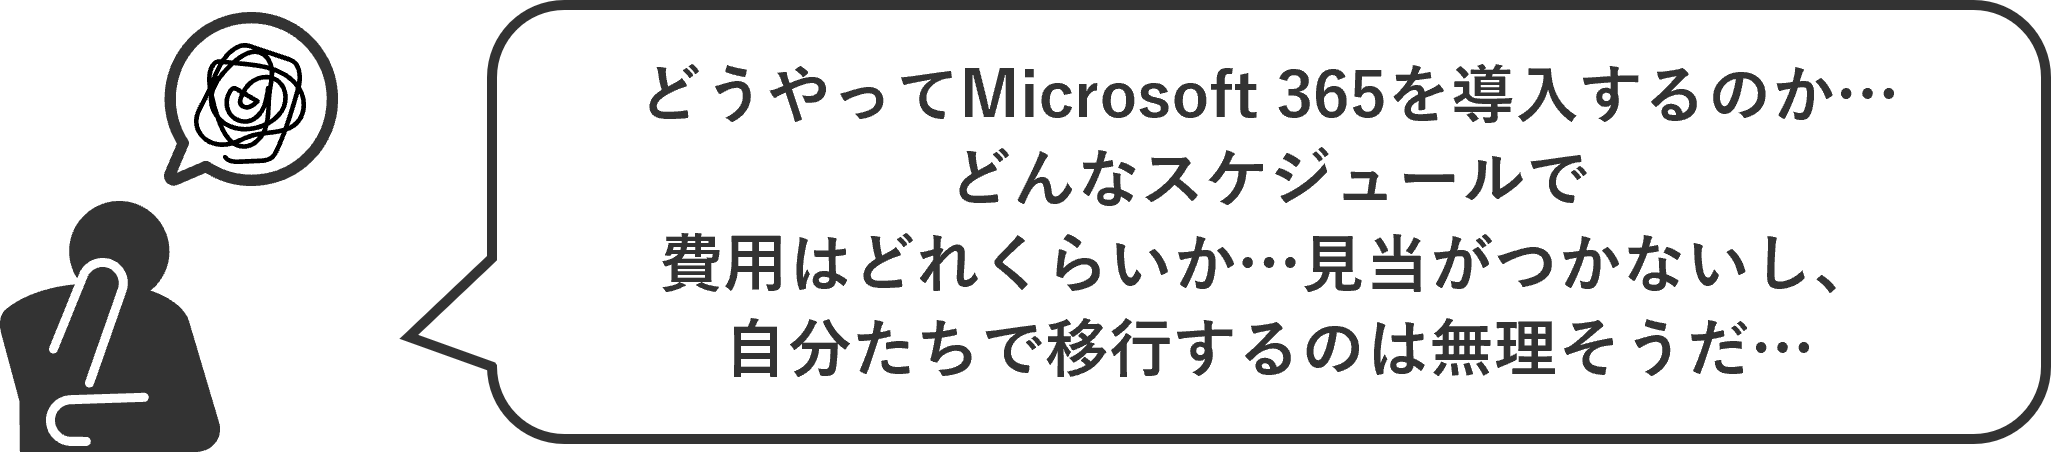 Microsoft 365^ڍsT[rX